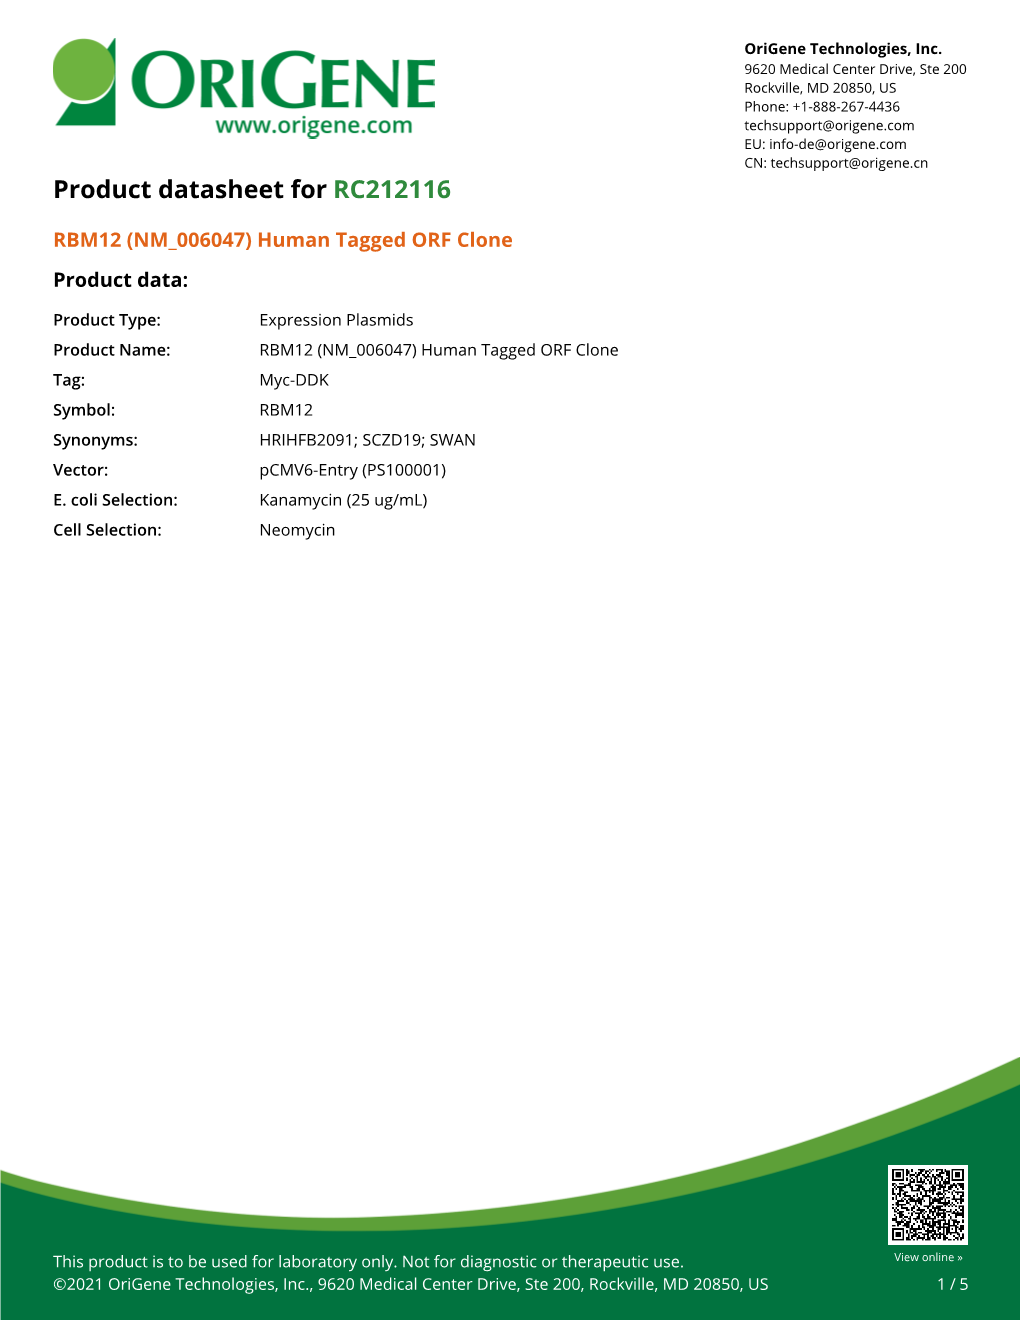 RBM12 (NM 006047) Human Tagged ORF Clone Product Data